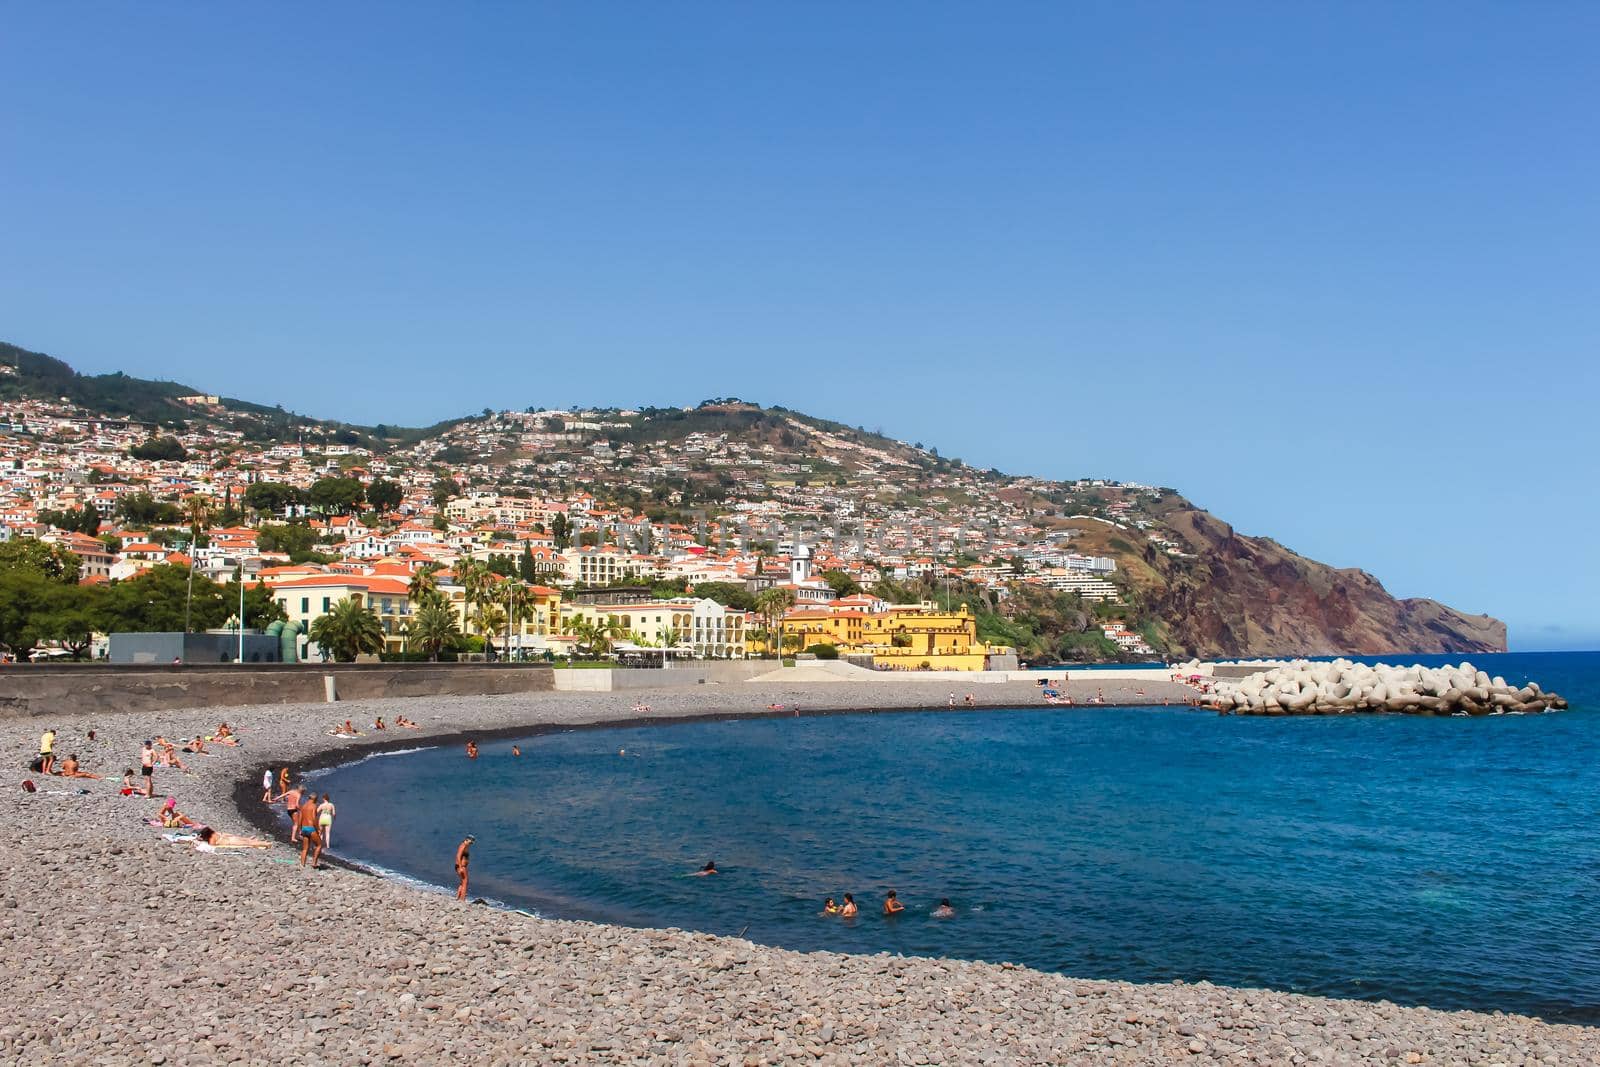 Sunbathers on the pebble beach coast of Funchal, Madeira, Portugal. by olifrenchphoto